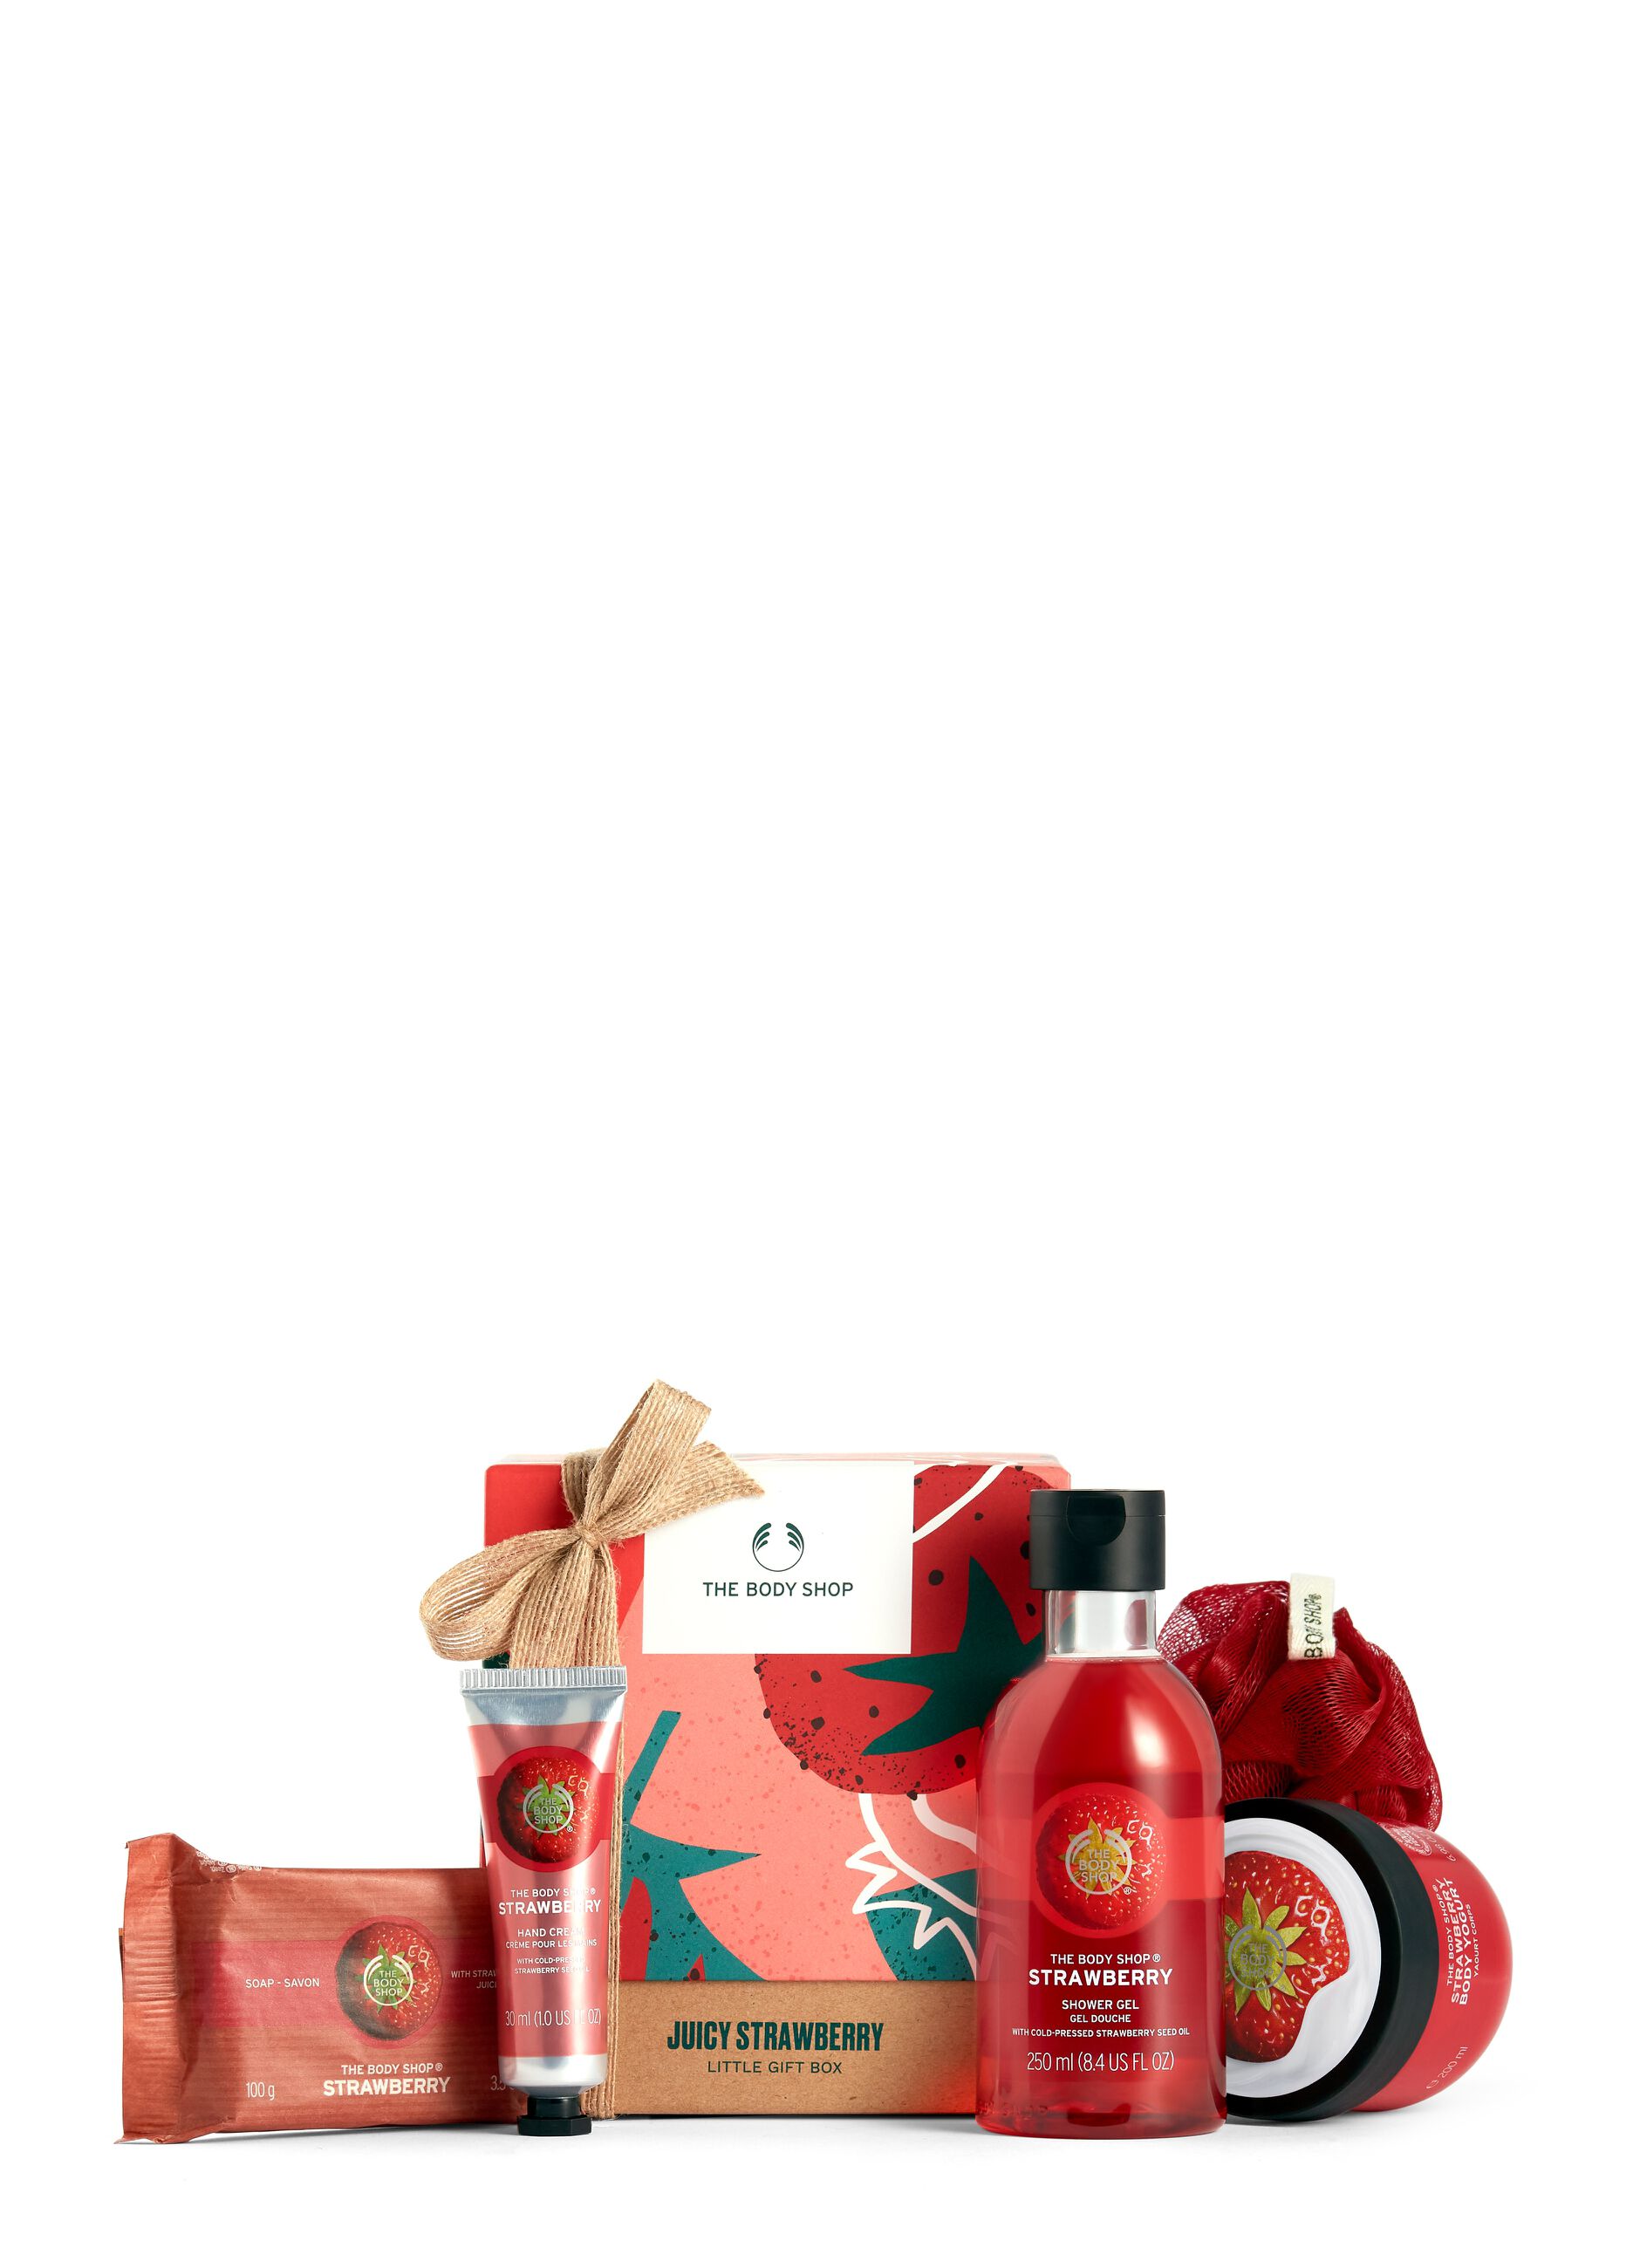 The Body Shop small strawberry gift box